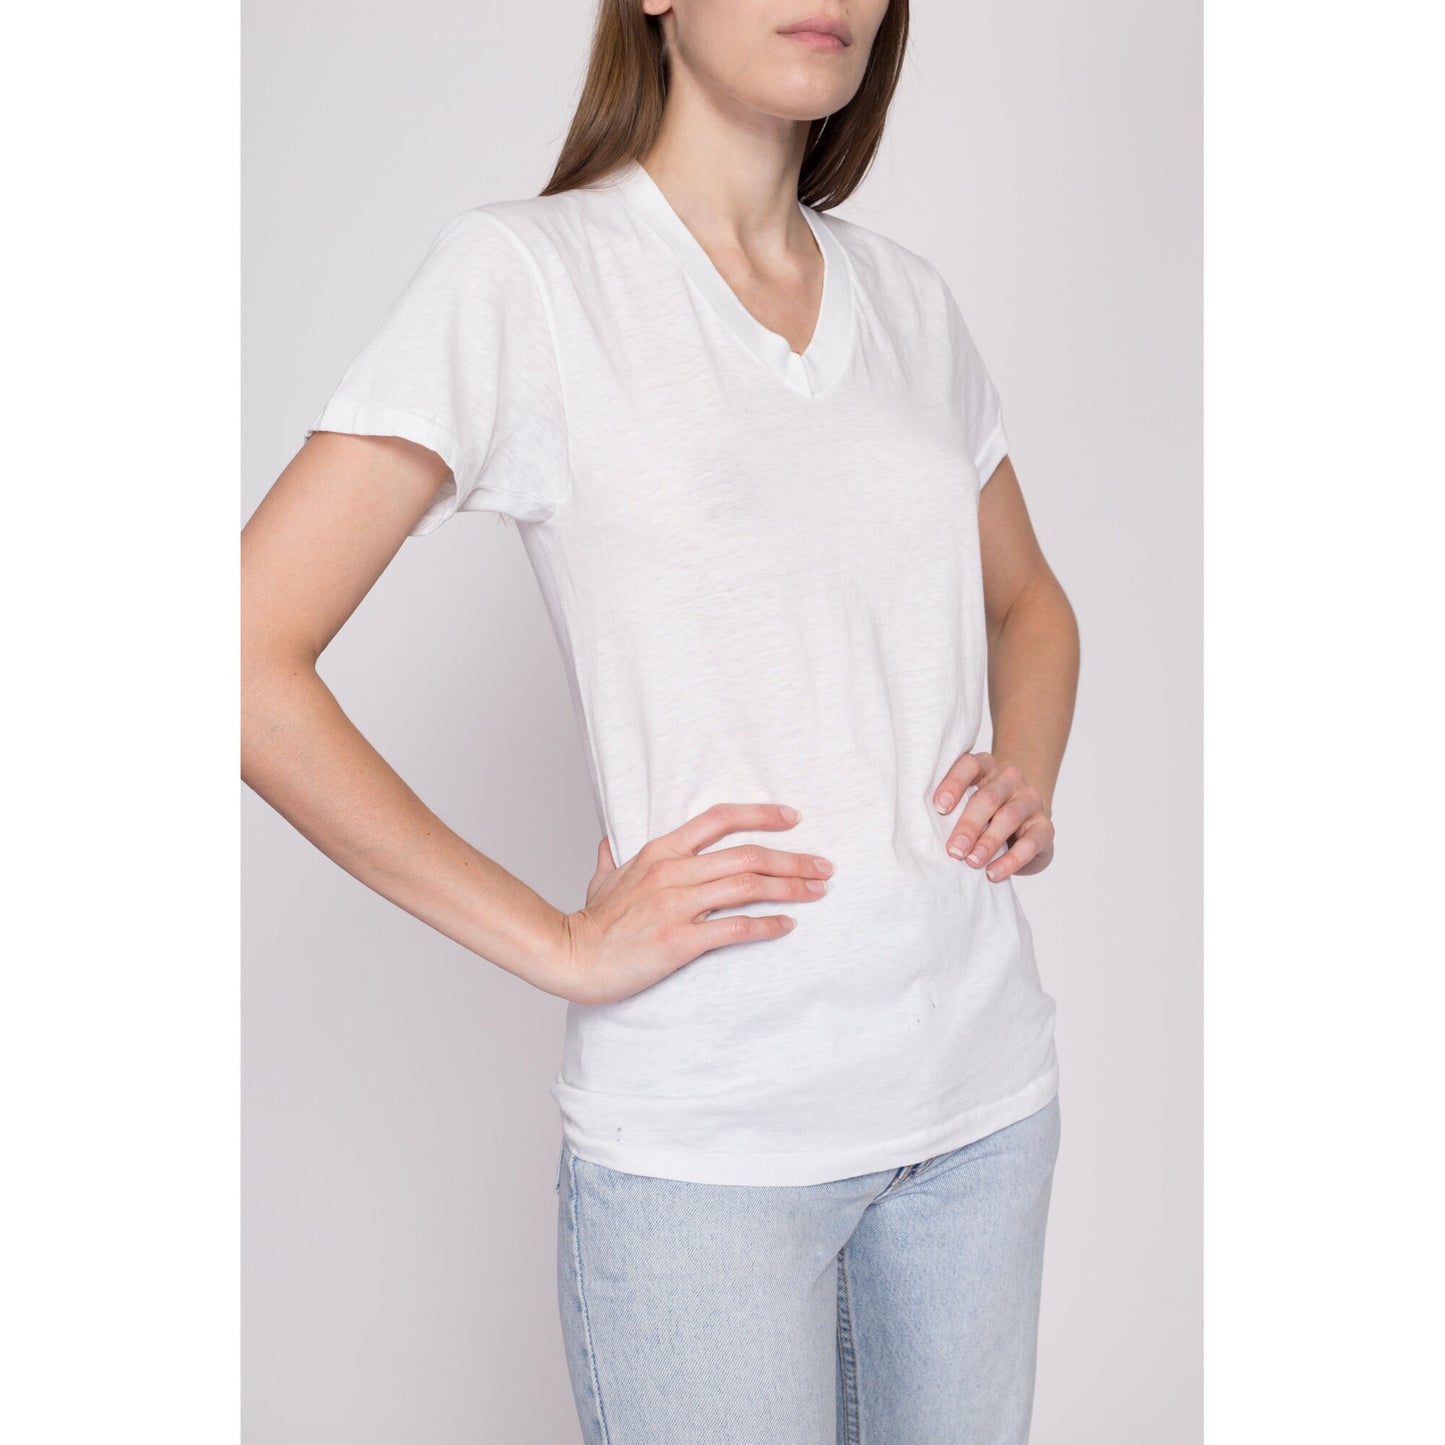 S-M| Vintage Paper Thin Blank White T Shirt - Small to Medium | 80s Single Stitch Unisex V Neck Tee Threadbare Undershirt